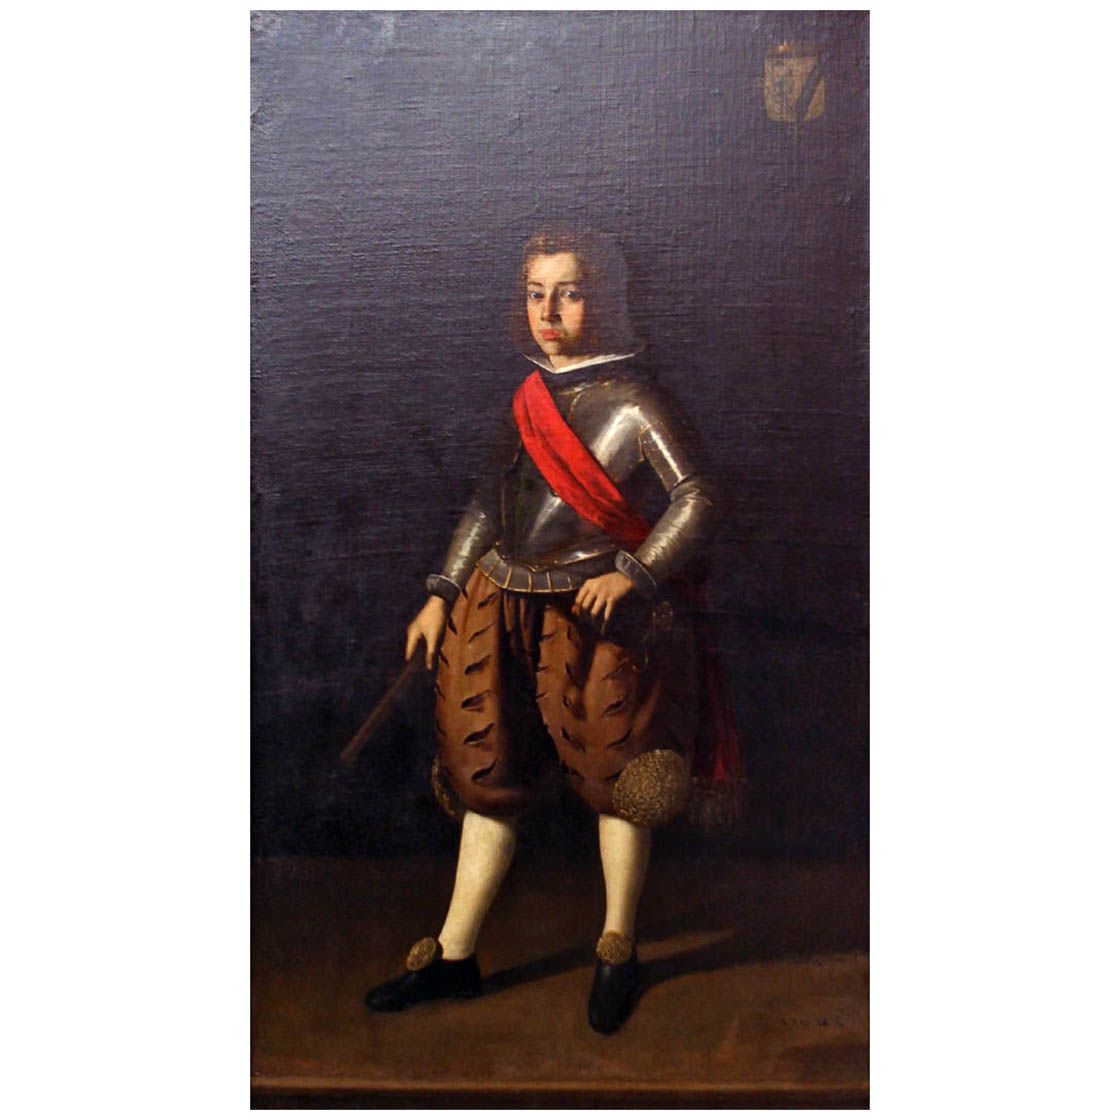 Francisco de Zurbaran. Don Alonso Verdugo de Albornoz. 1635. Gemaldegalerie, Berlin